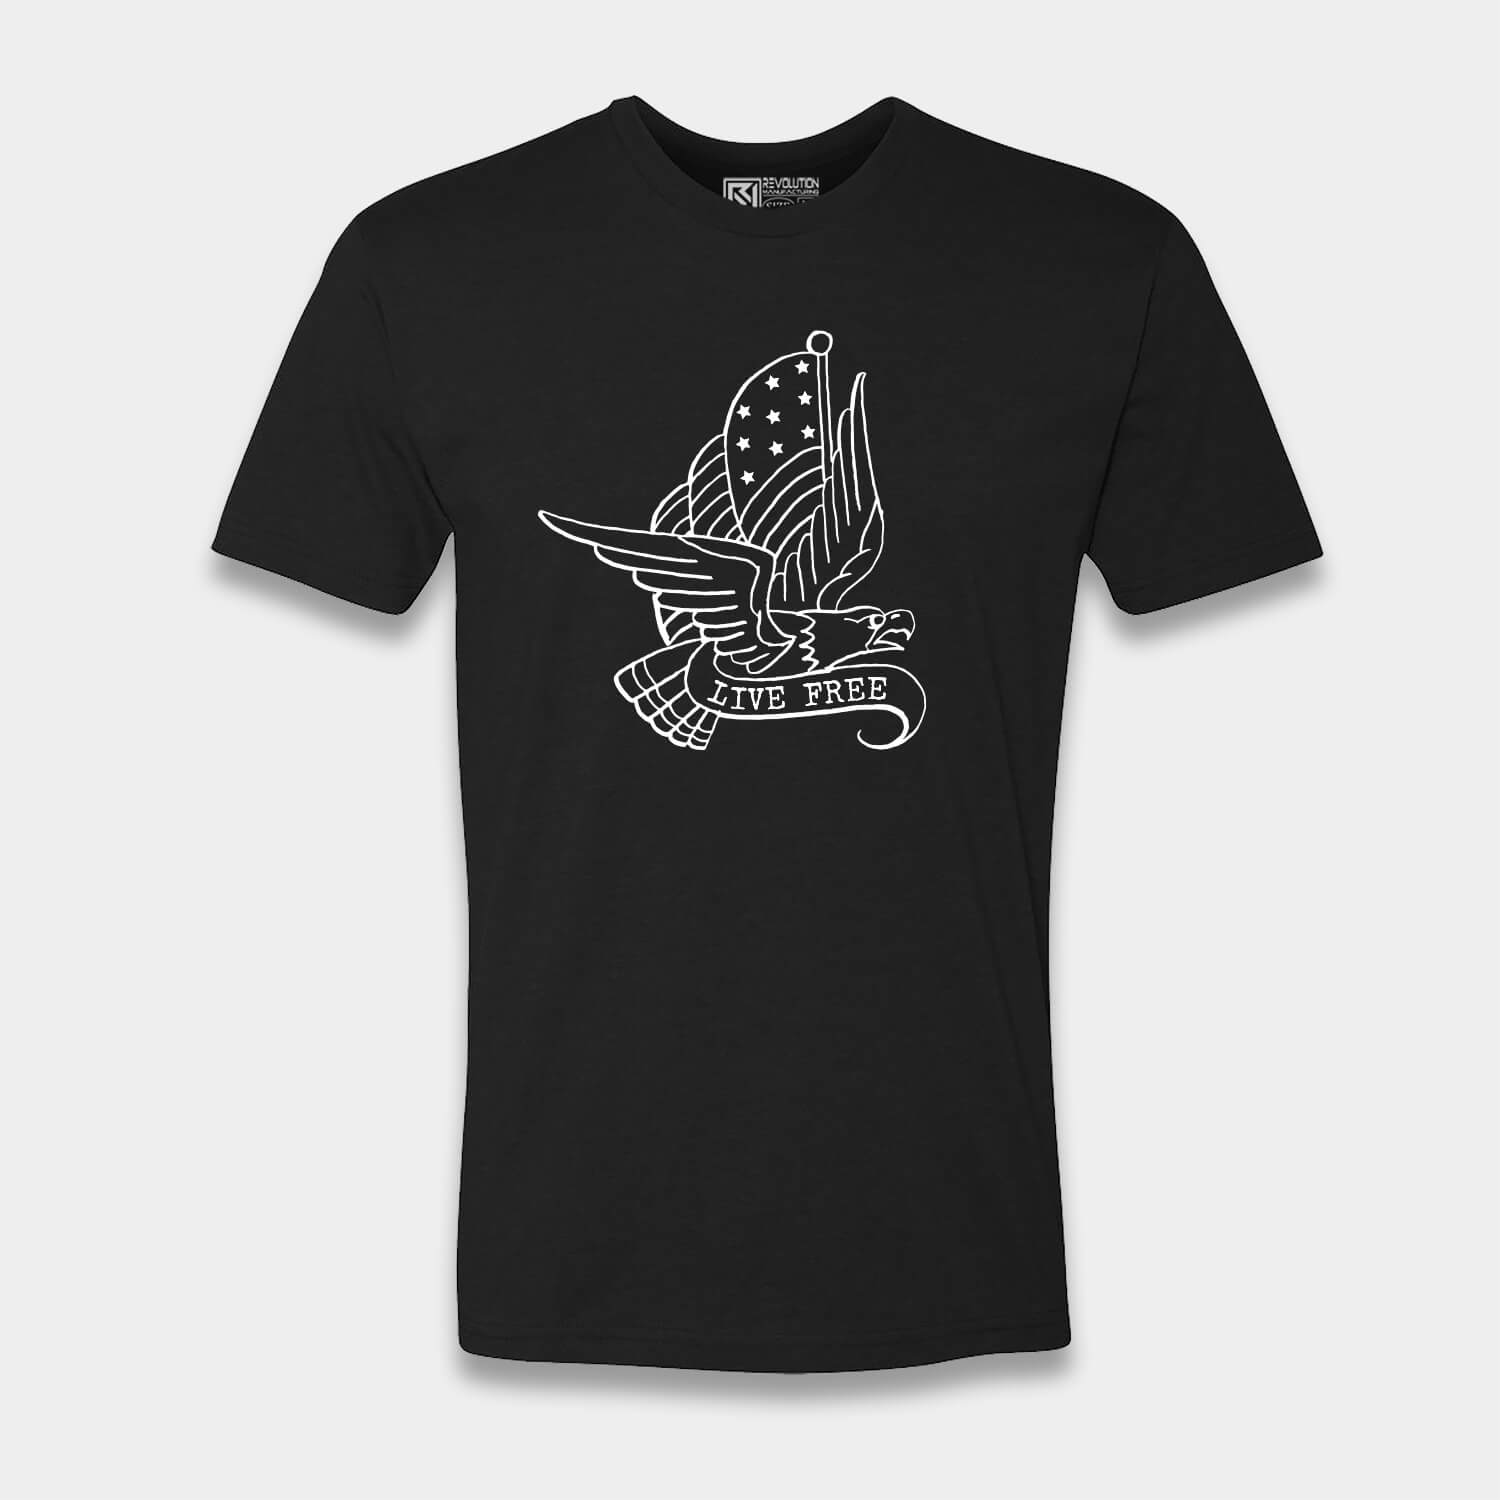 LIVE FREE Eagle T-Shirt